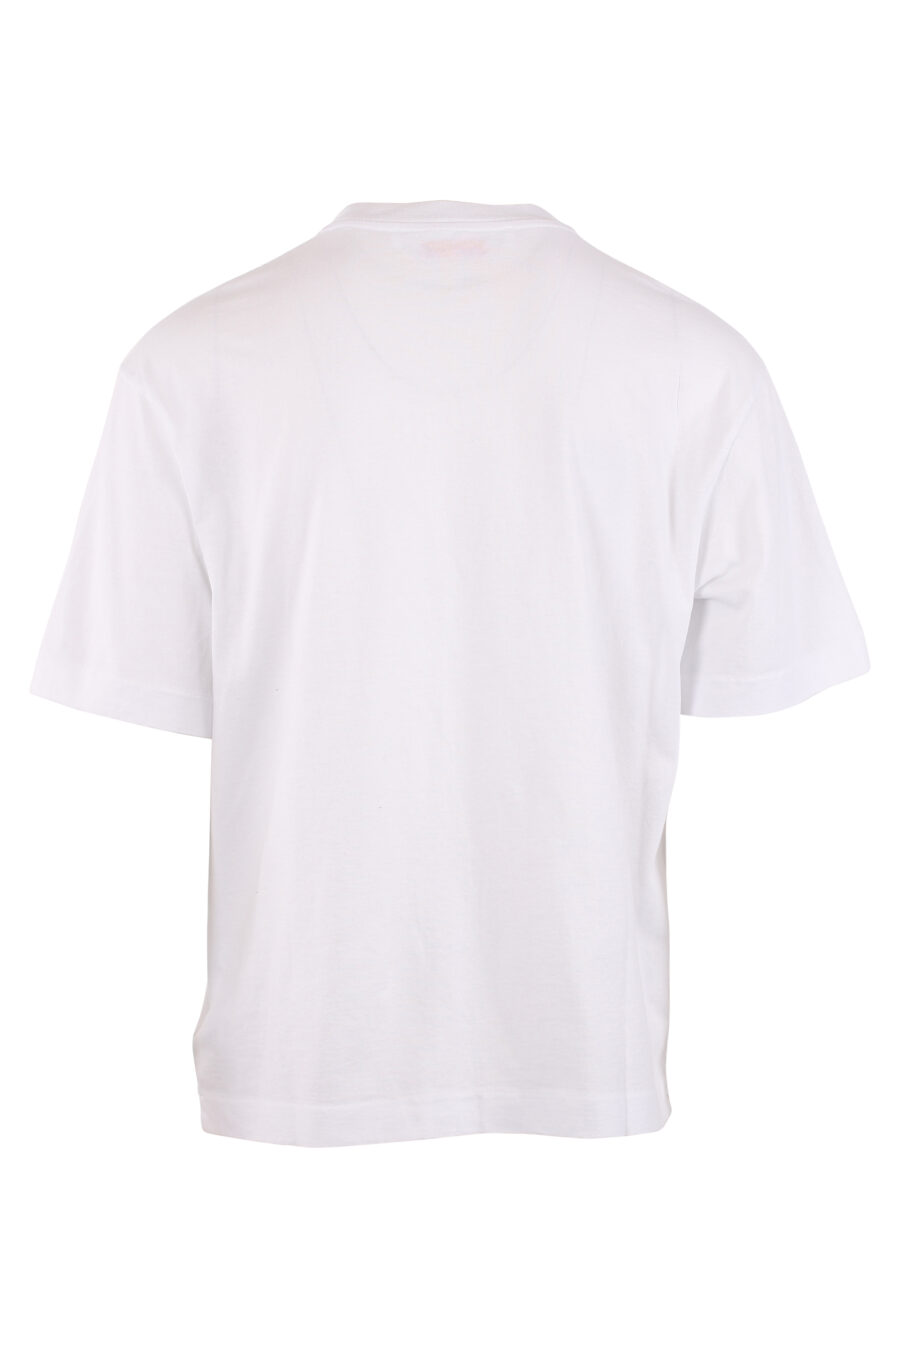 Camiseta blanca oversize "Spray" - IMG 1511